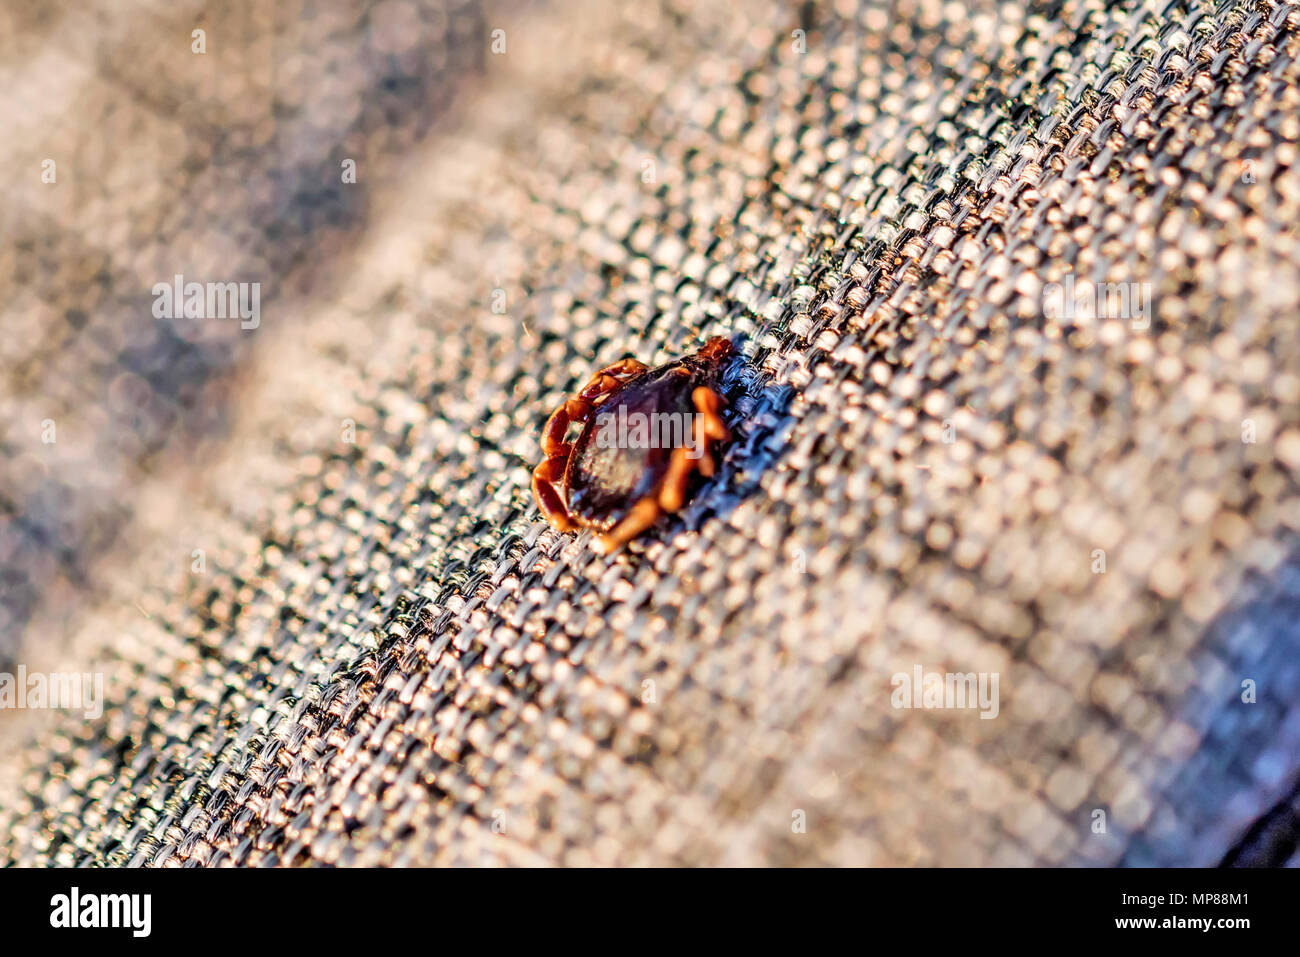 Dangerous parasite mite sits on cloth texture Stock Photo